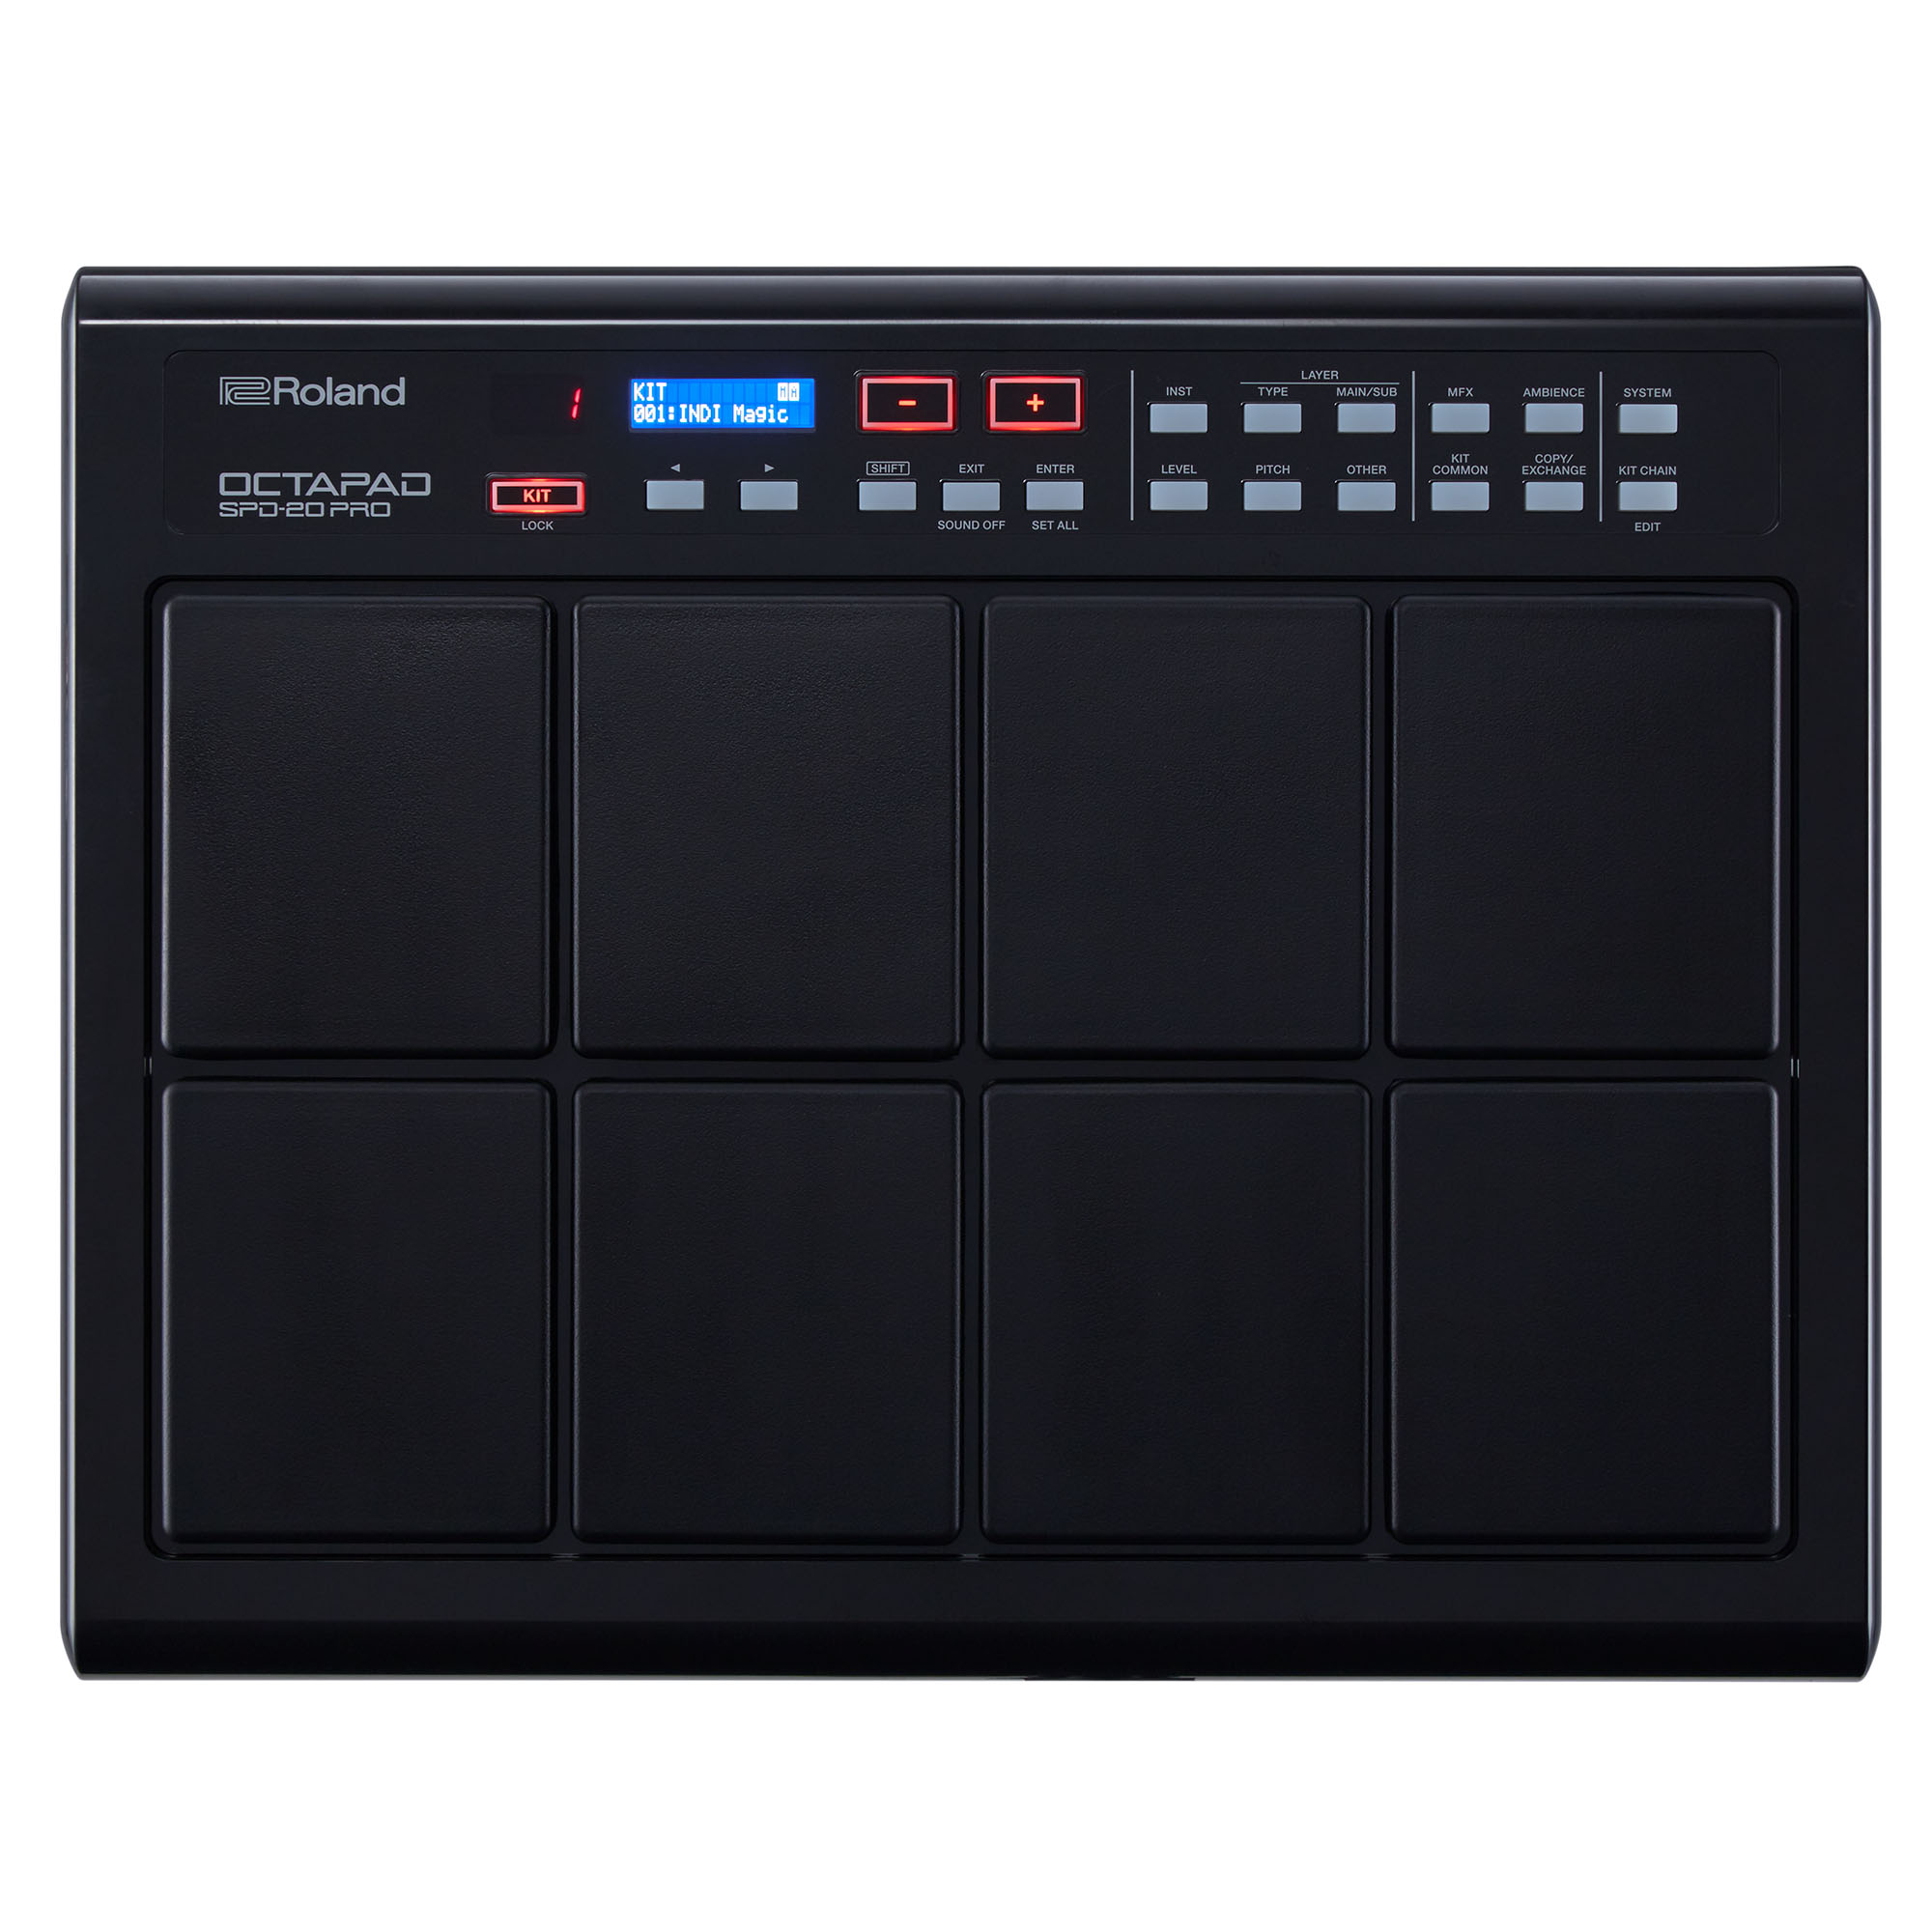 Roland Spd-20 Pro Bk - E-Drums Multi pad - Variation 2